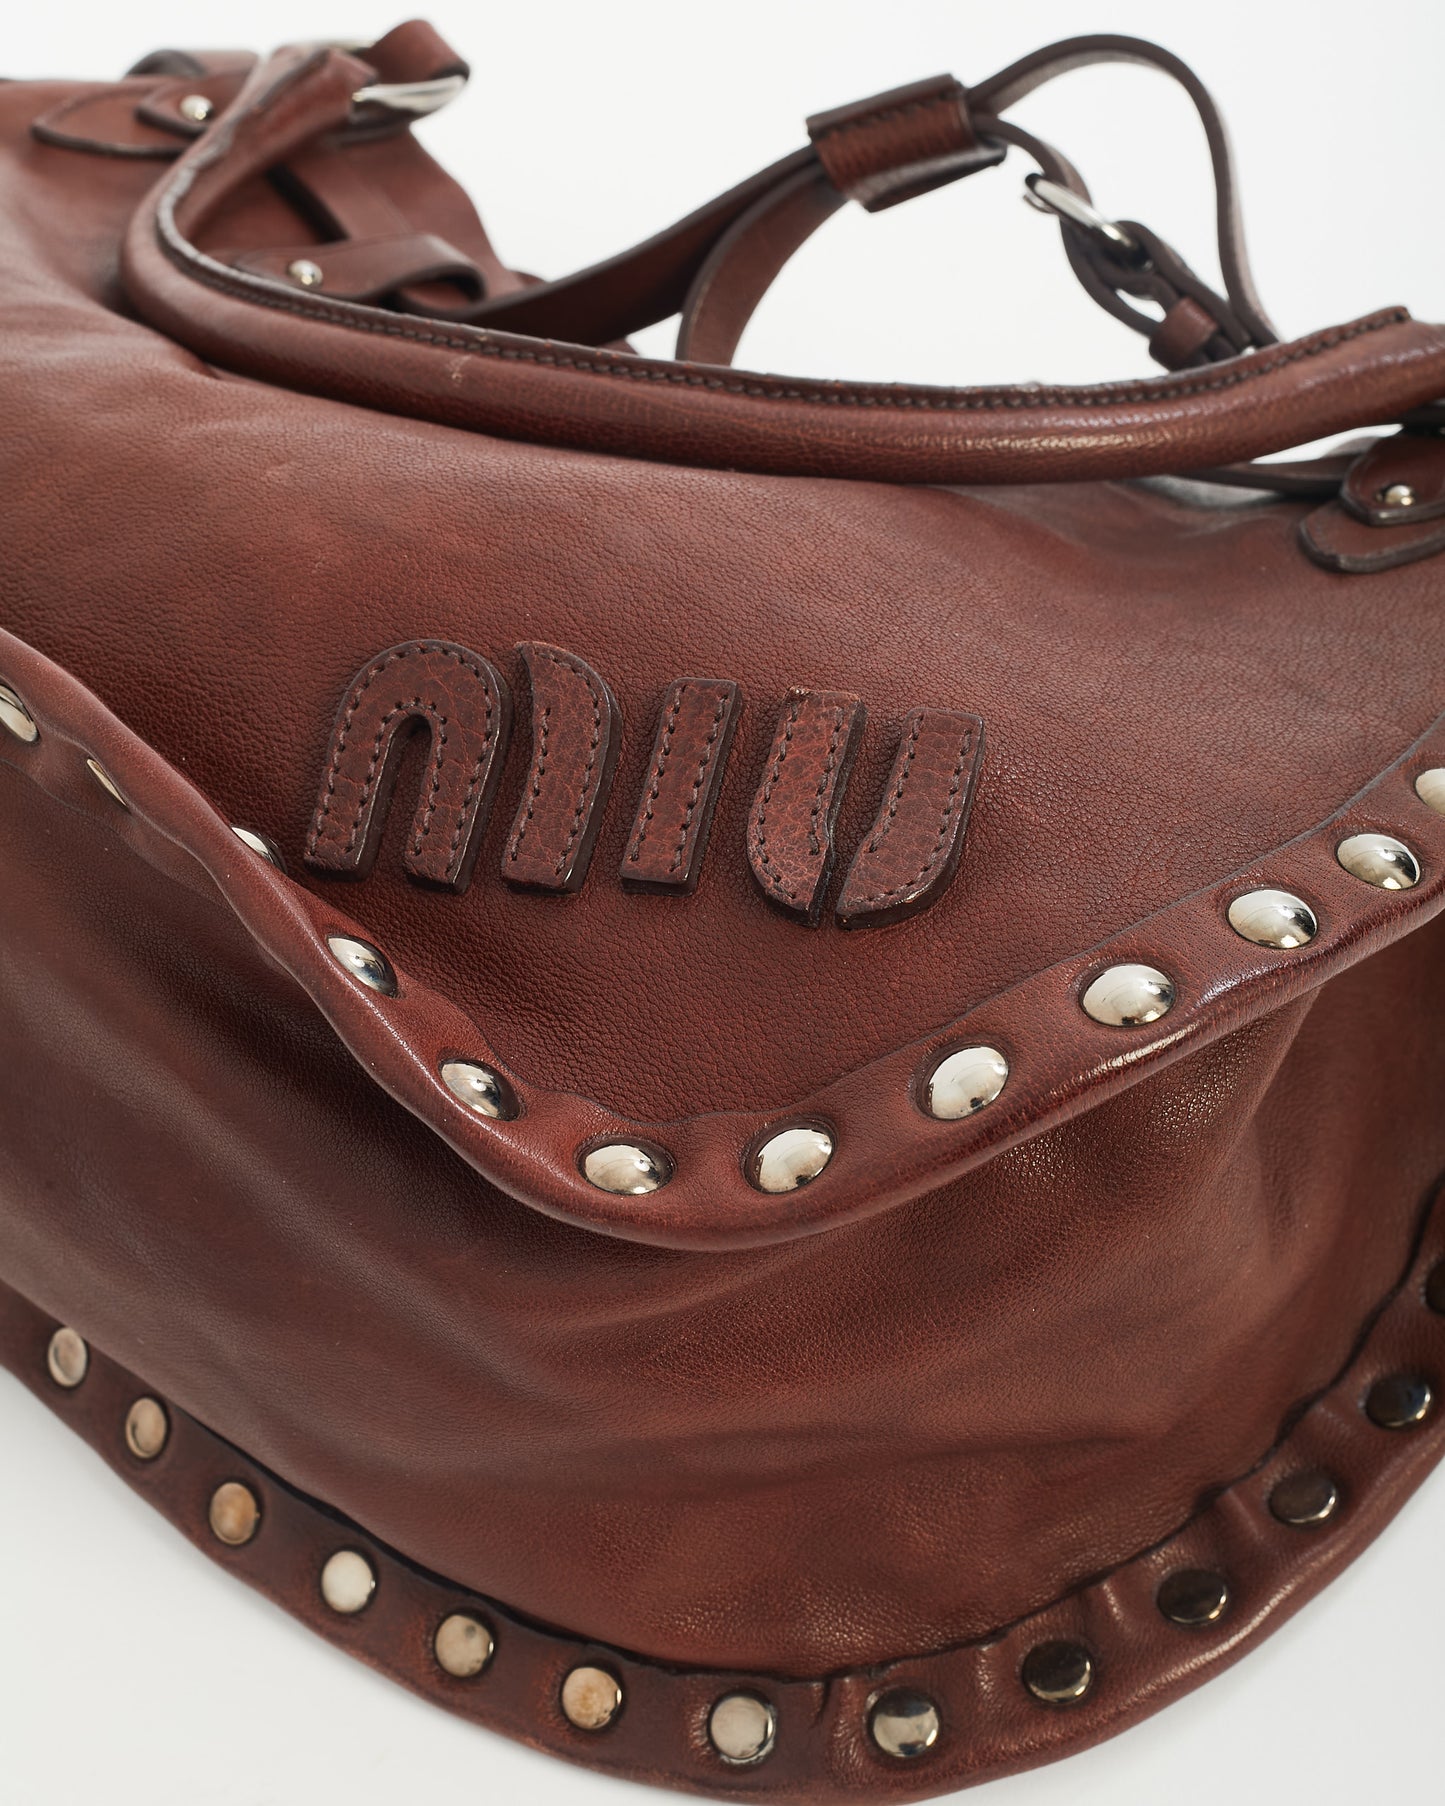 Miu Miu Brown Leather Studded Shoulder Bag